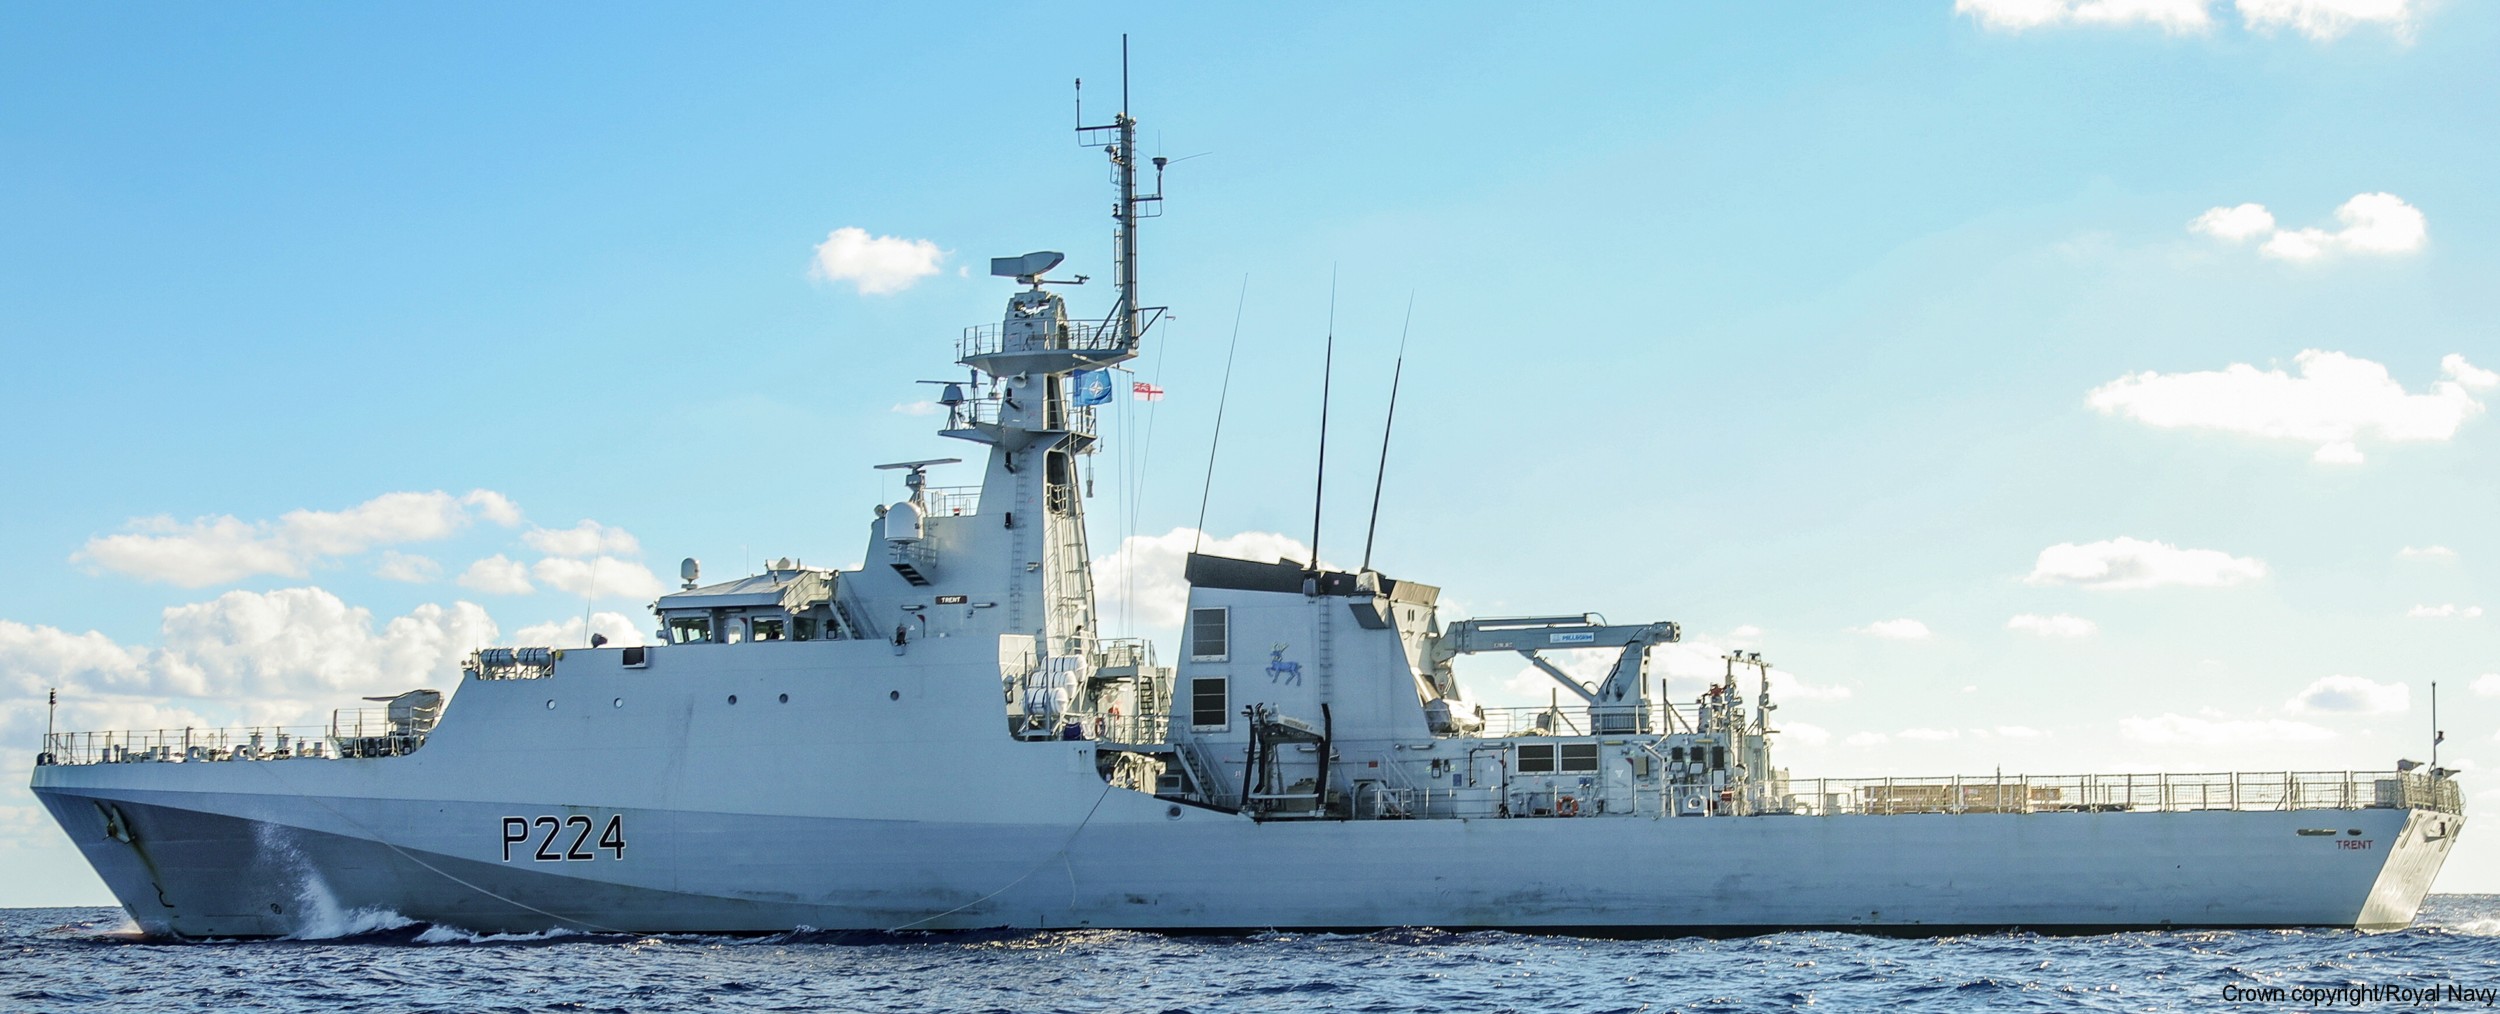 p224 hms trent river class offshore patrol vessel opv royal navy 18